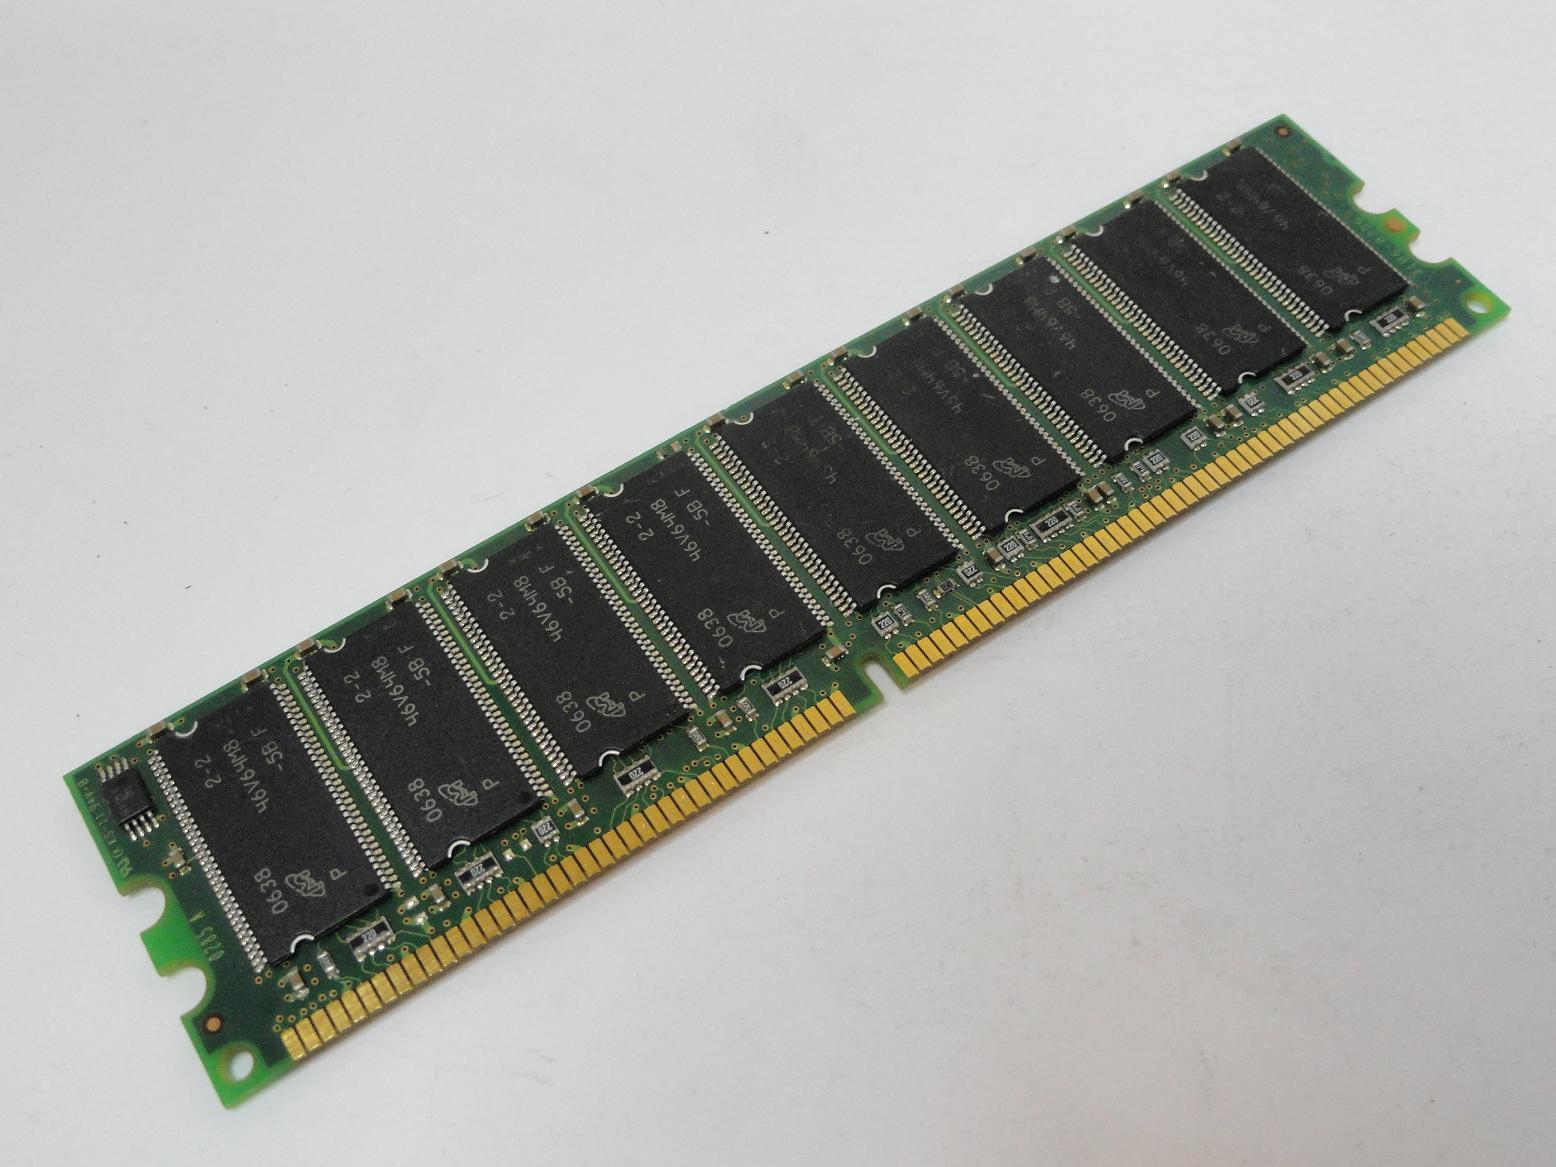 PR04769_PC3200U-30331-B1_Micron Sun 1GB PC3200 DDR-400MHz DIMM RAM - Image3